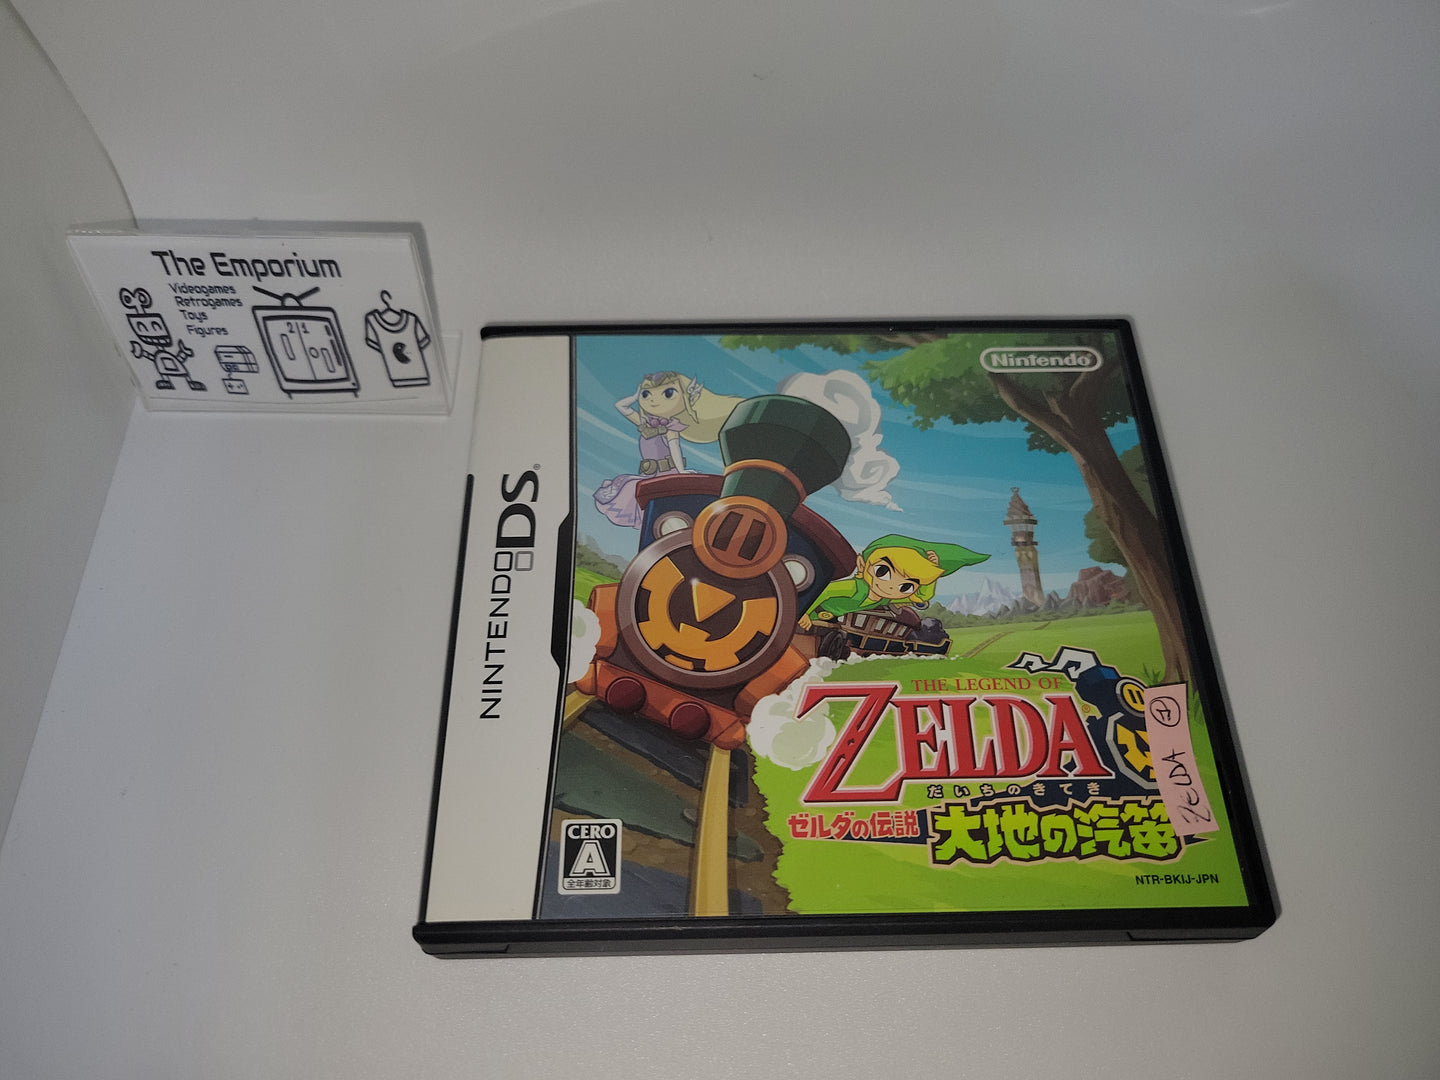 The Legend of Zelda: Spirit Tracks

- Nintendo Ds NDS